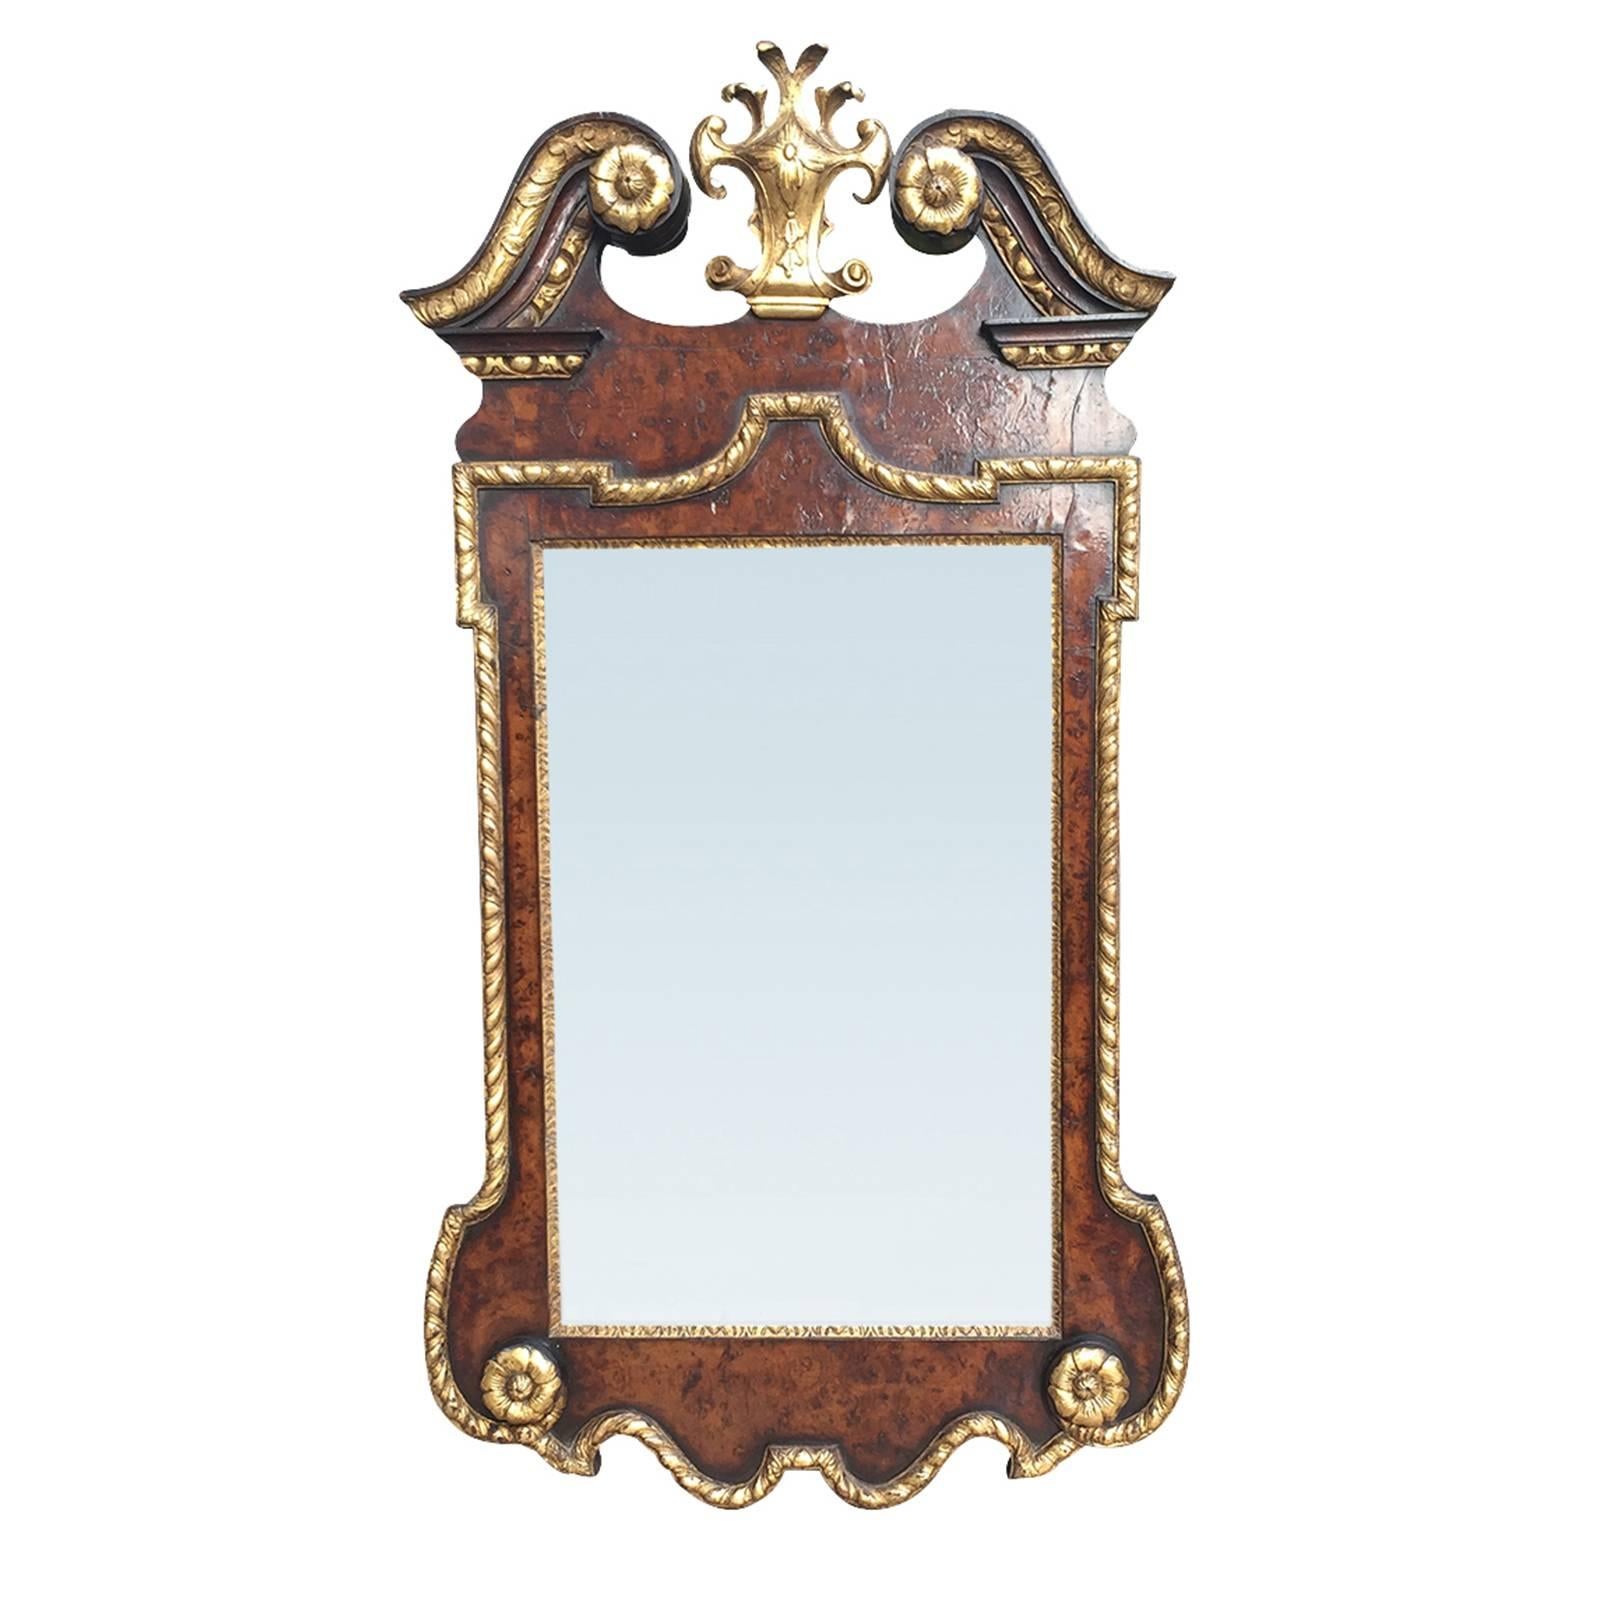 George II Style Burled Walnut and Parcel Gilt Mirror, circa 1900